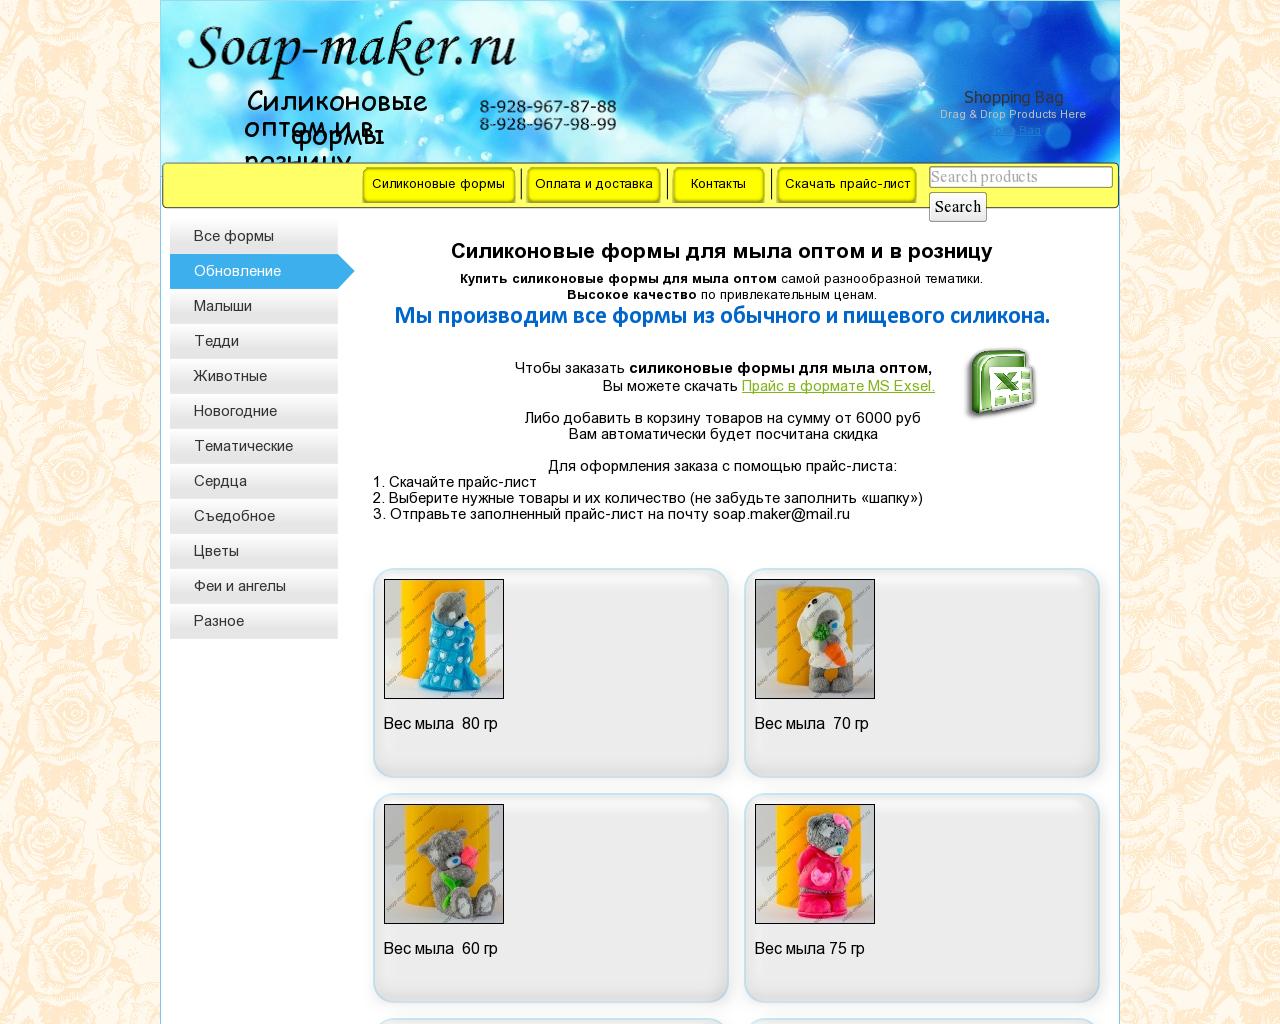 Изображение сайта soap-maker.ru в разрешении 1280x1024